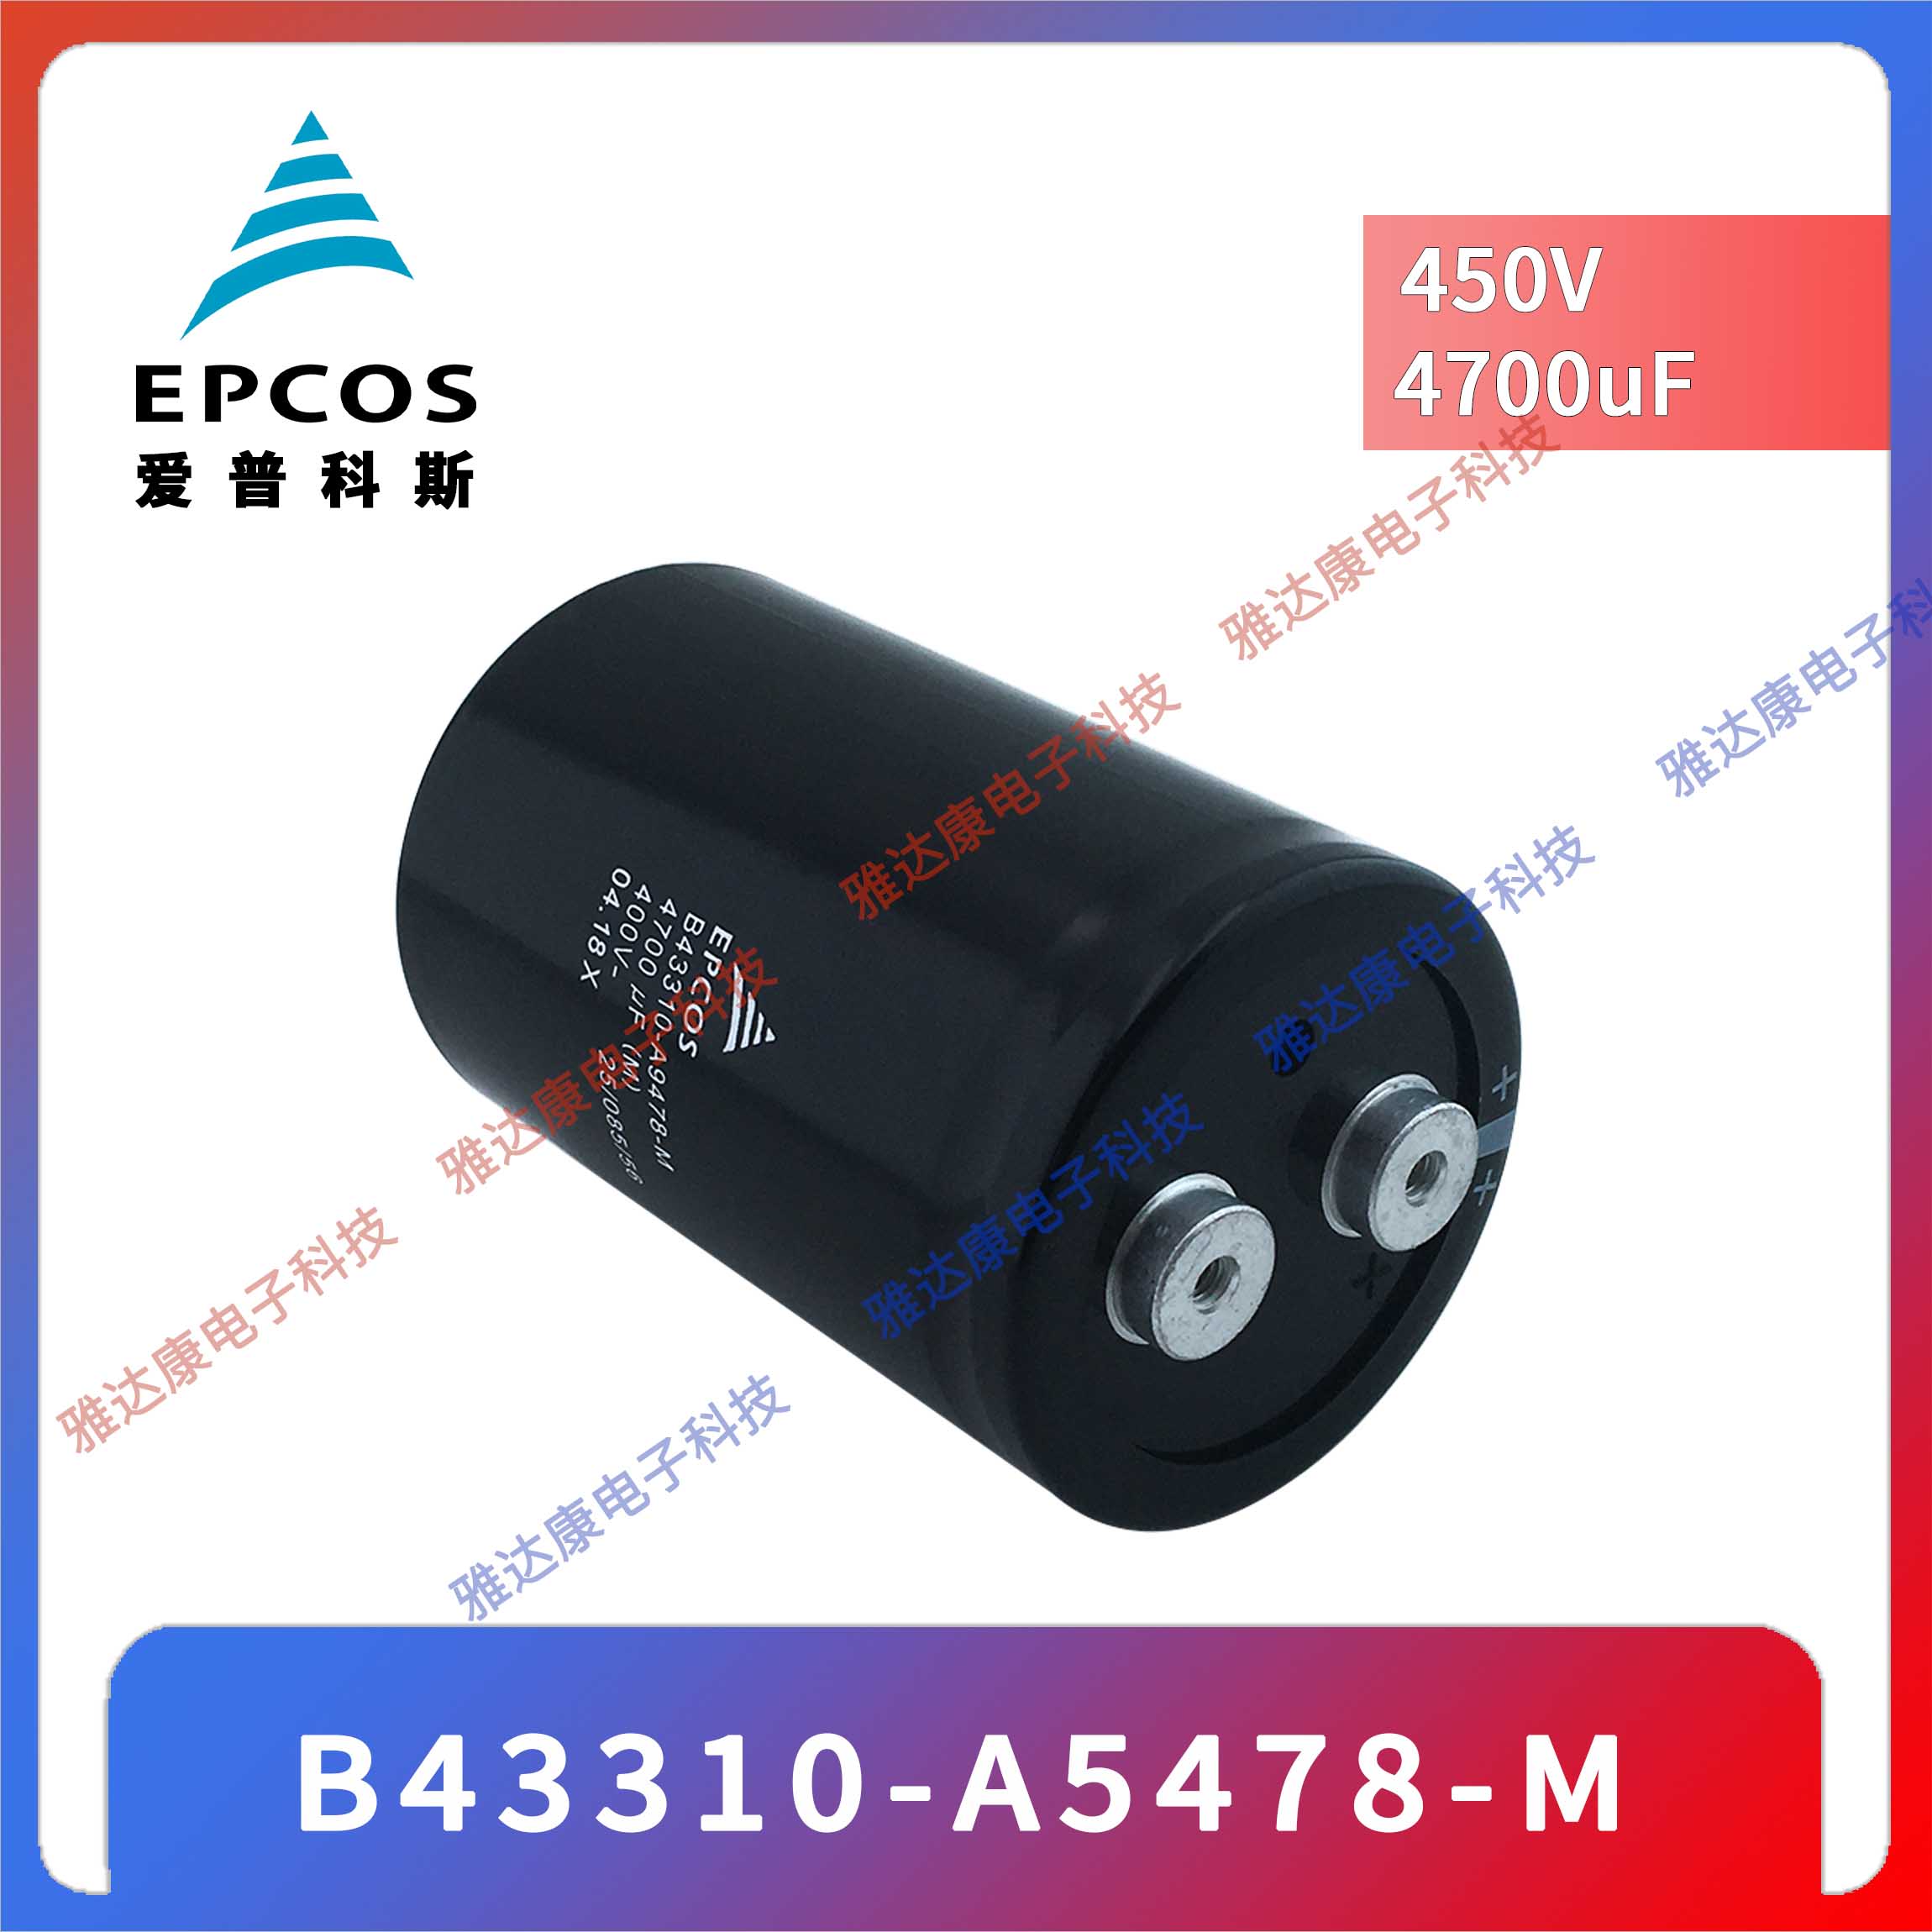 EPCOS铝电解电容器B43584-S5228-M1 450v2200uf底部带螺杆